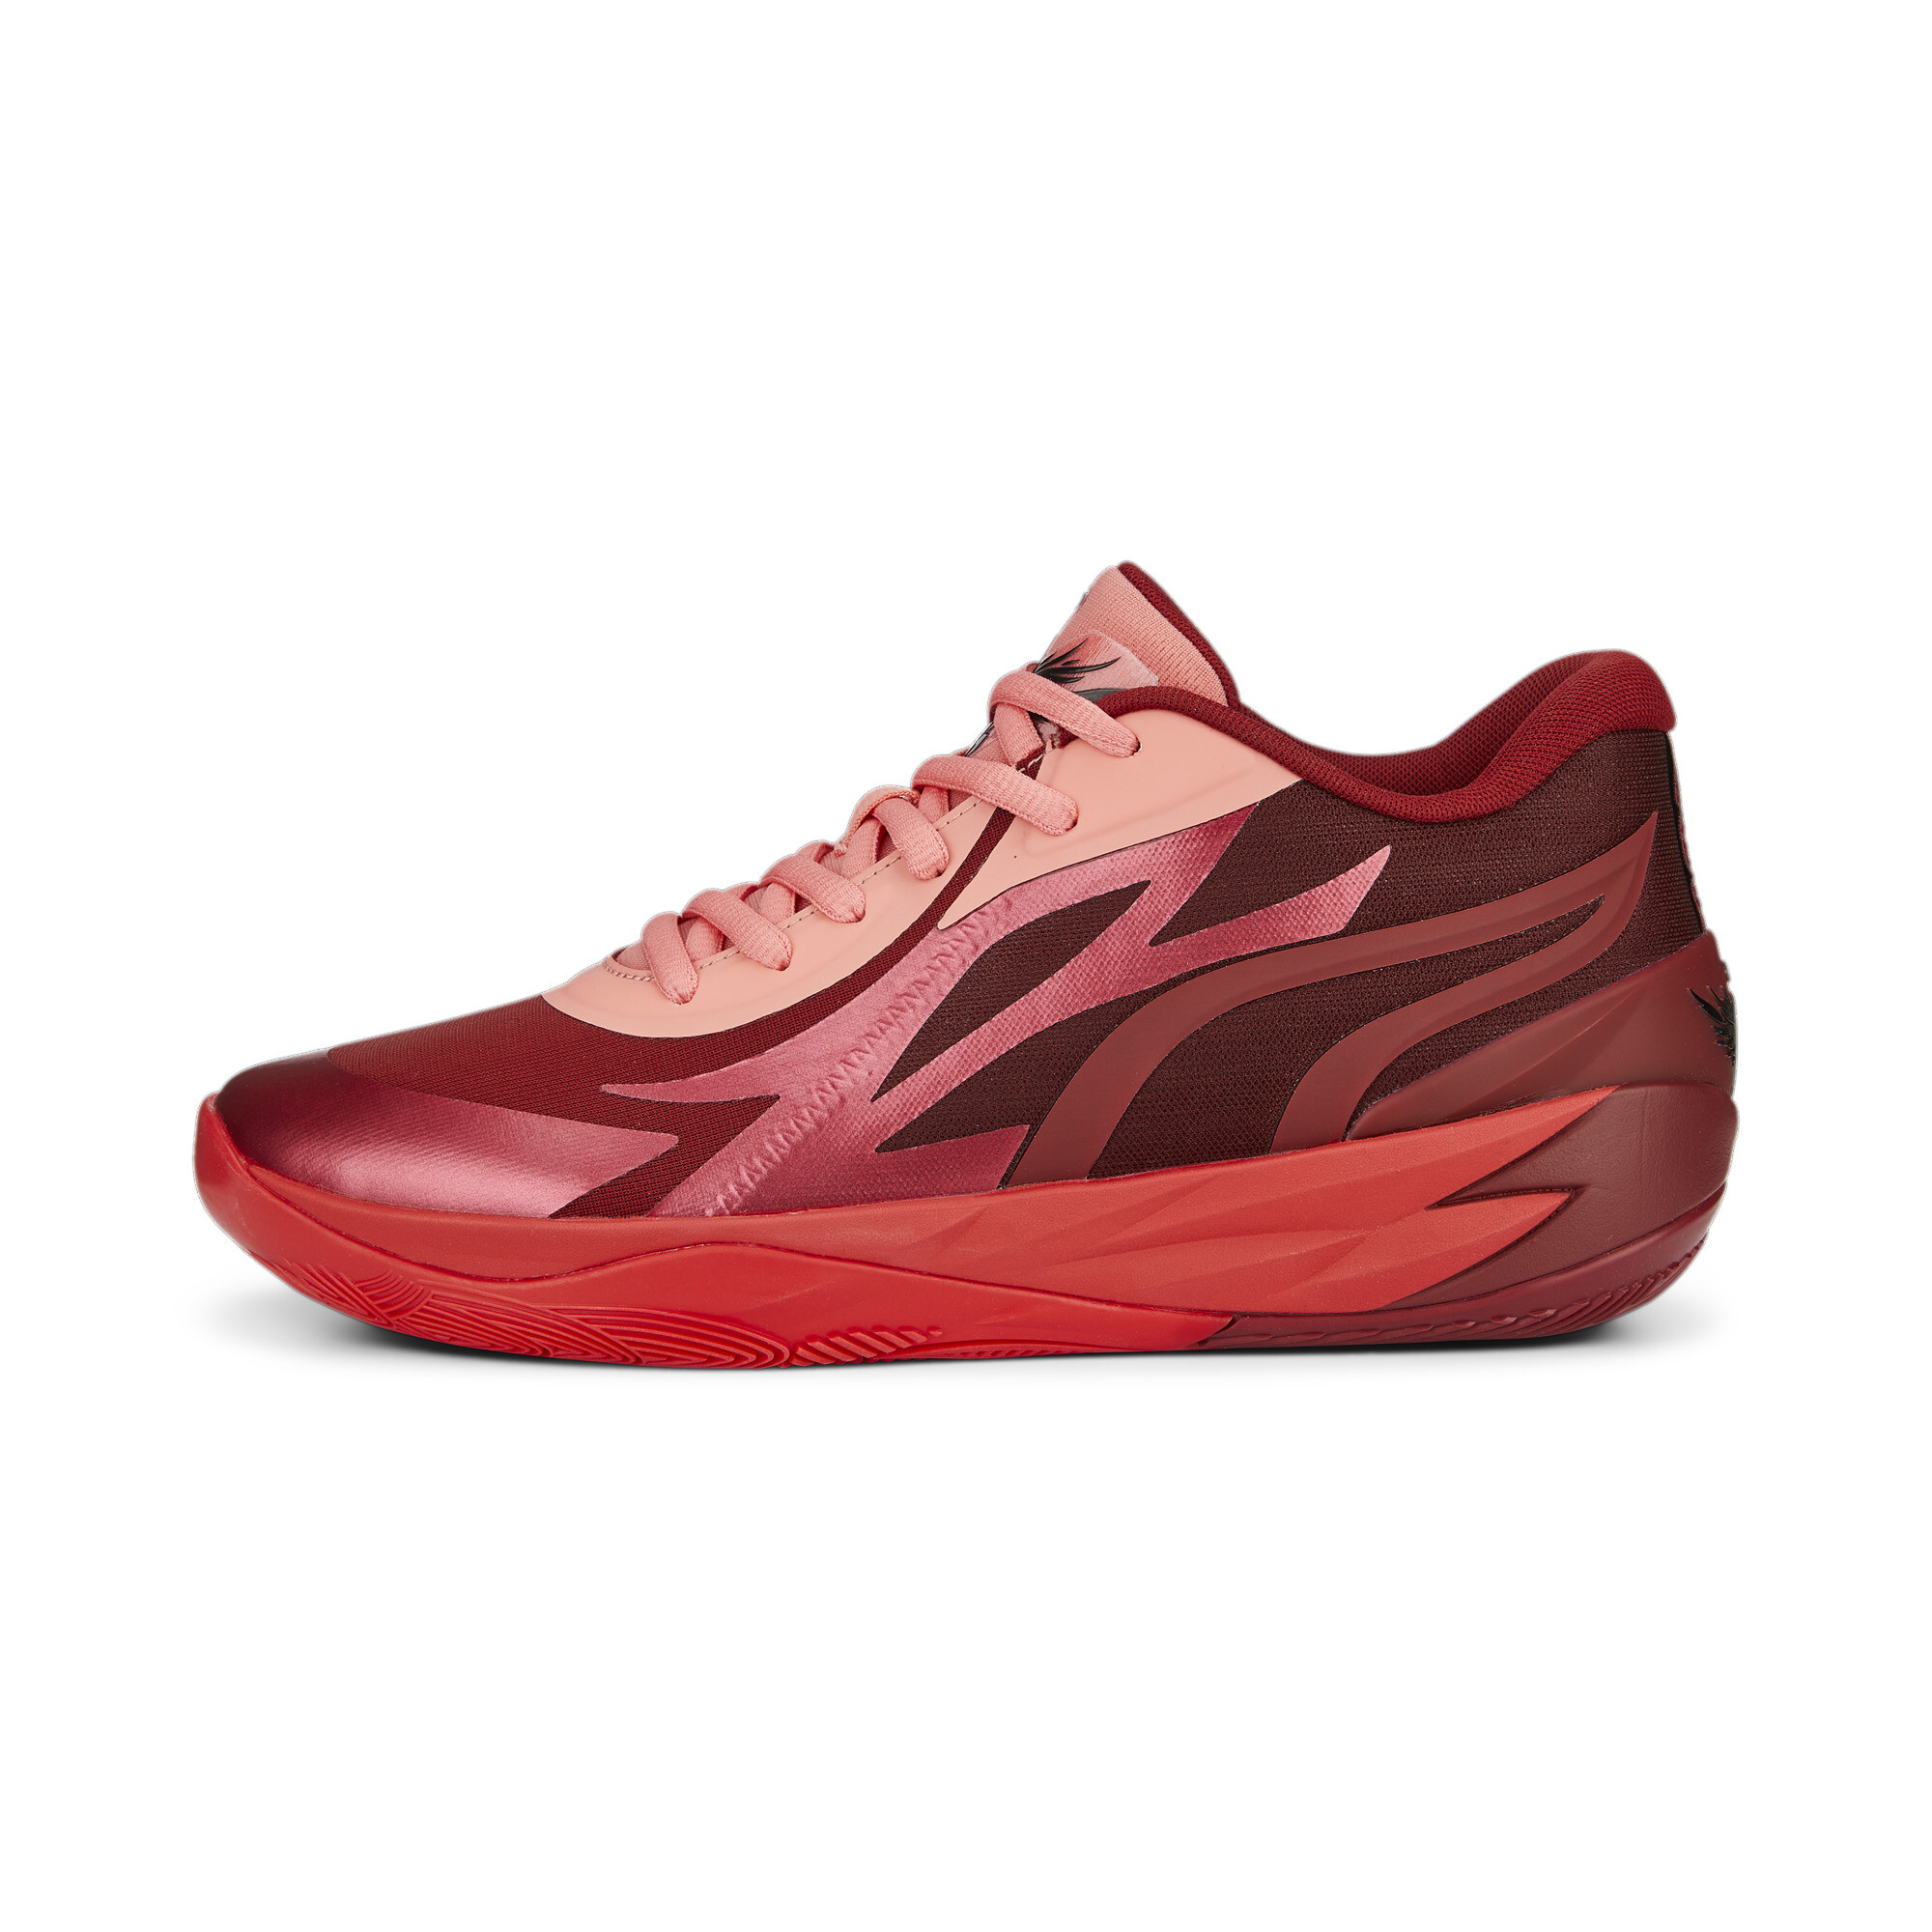 MB.02 Lo Basketball Shoes | Red | Puma | Sku: 377766_04